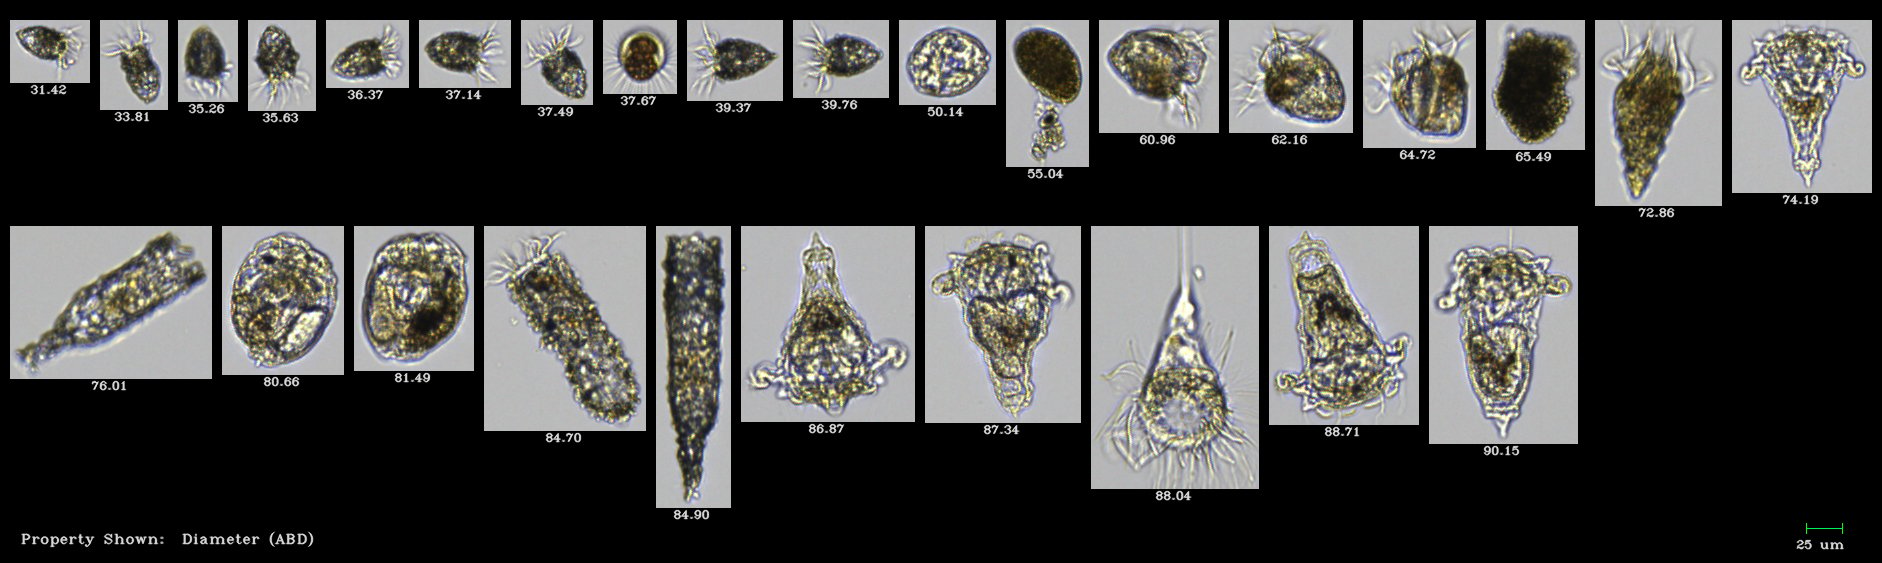 FlowCam Macro collage of zooplankton in Narragansett Bay